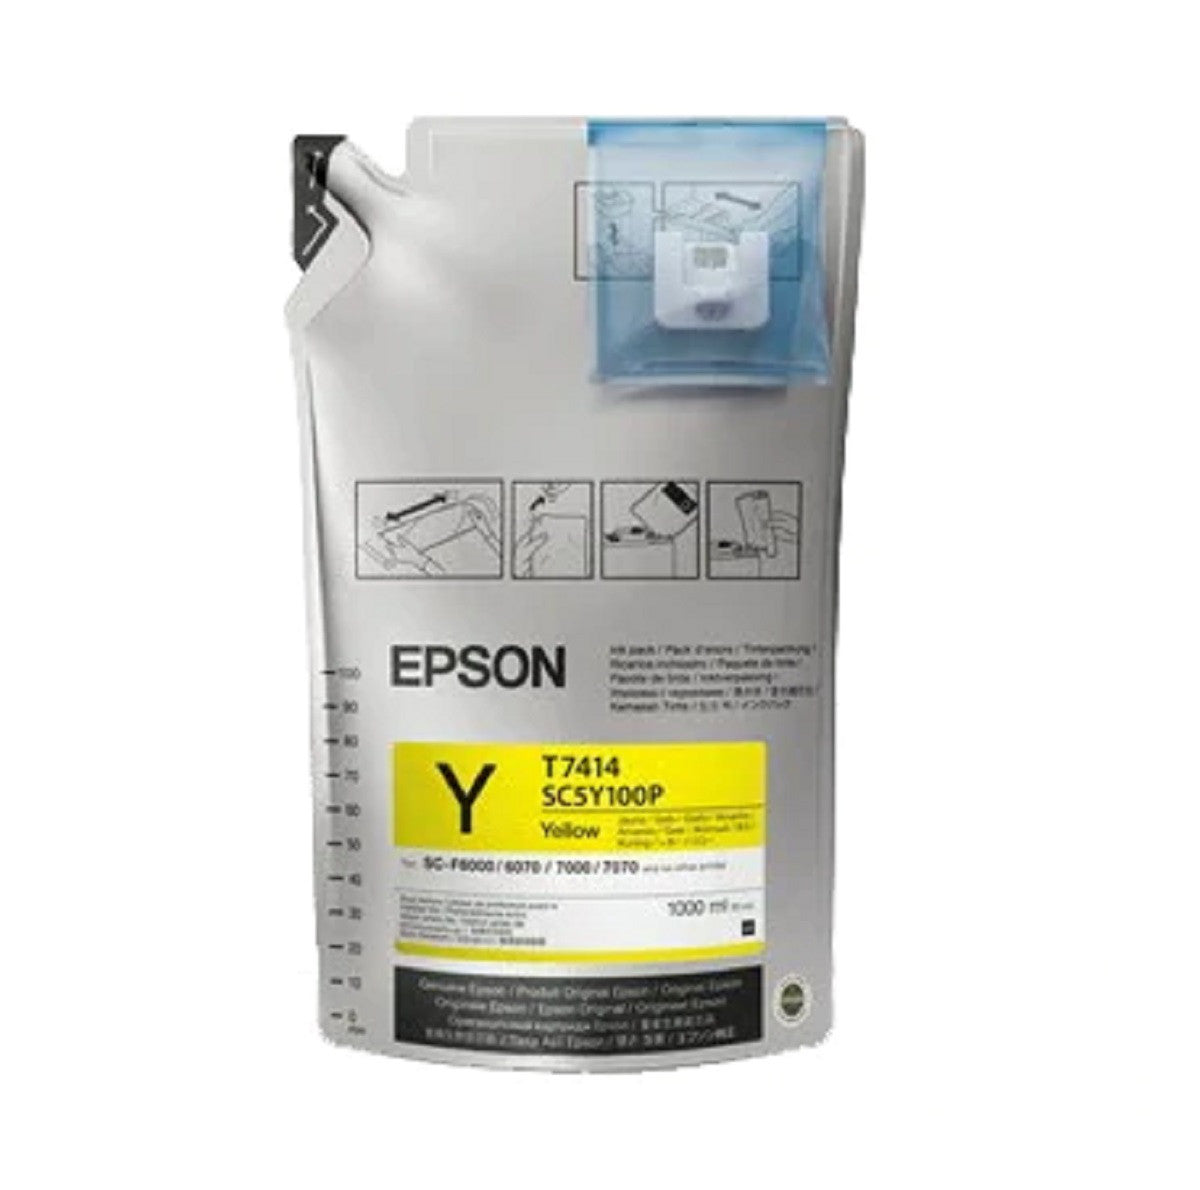 epson T741 Ink Bag - yellow